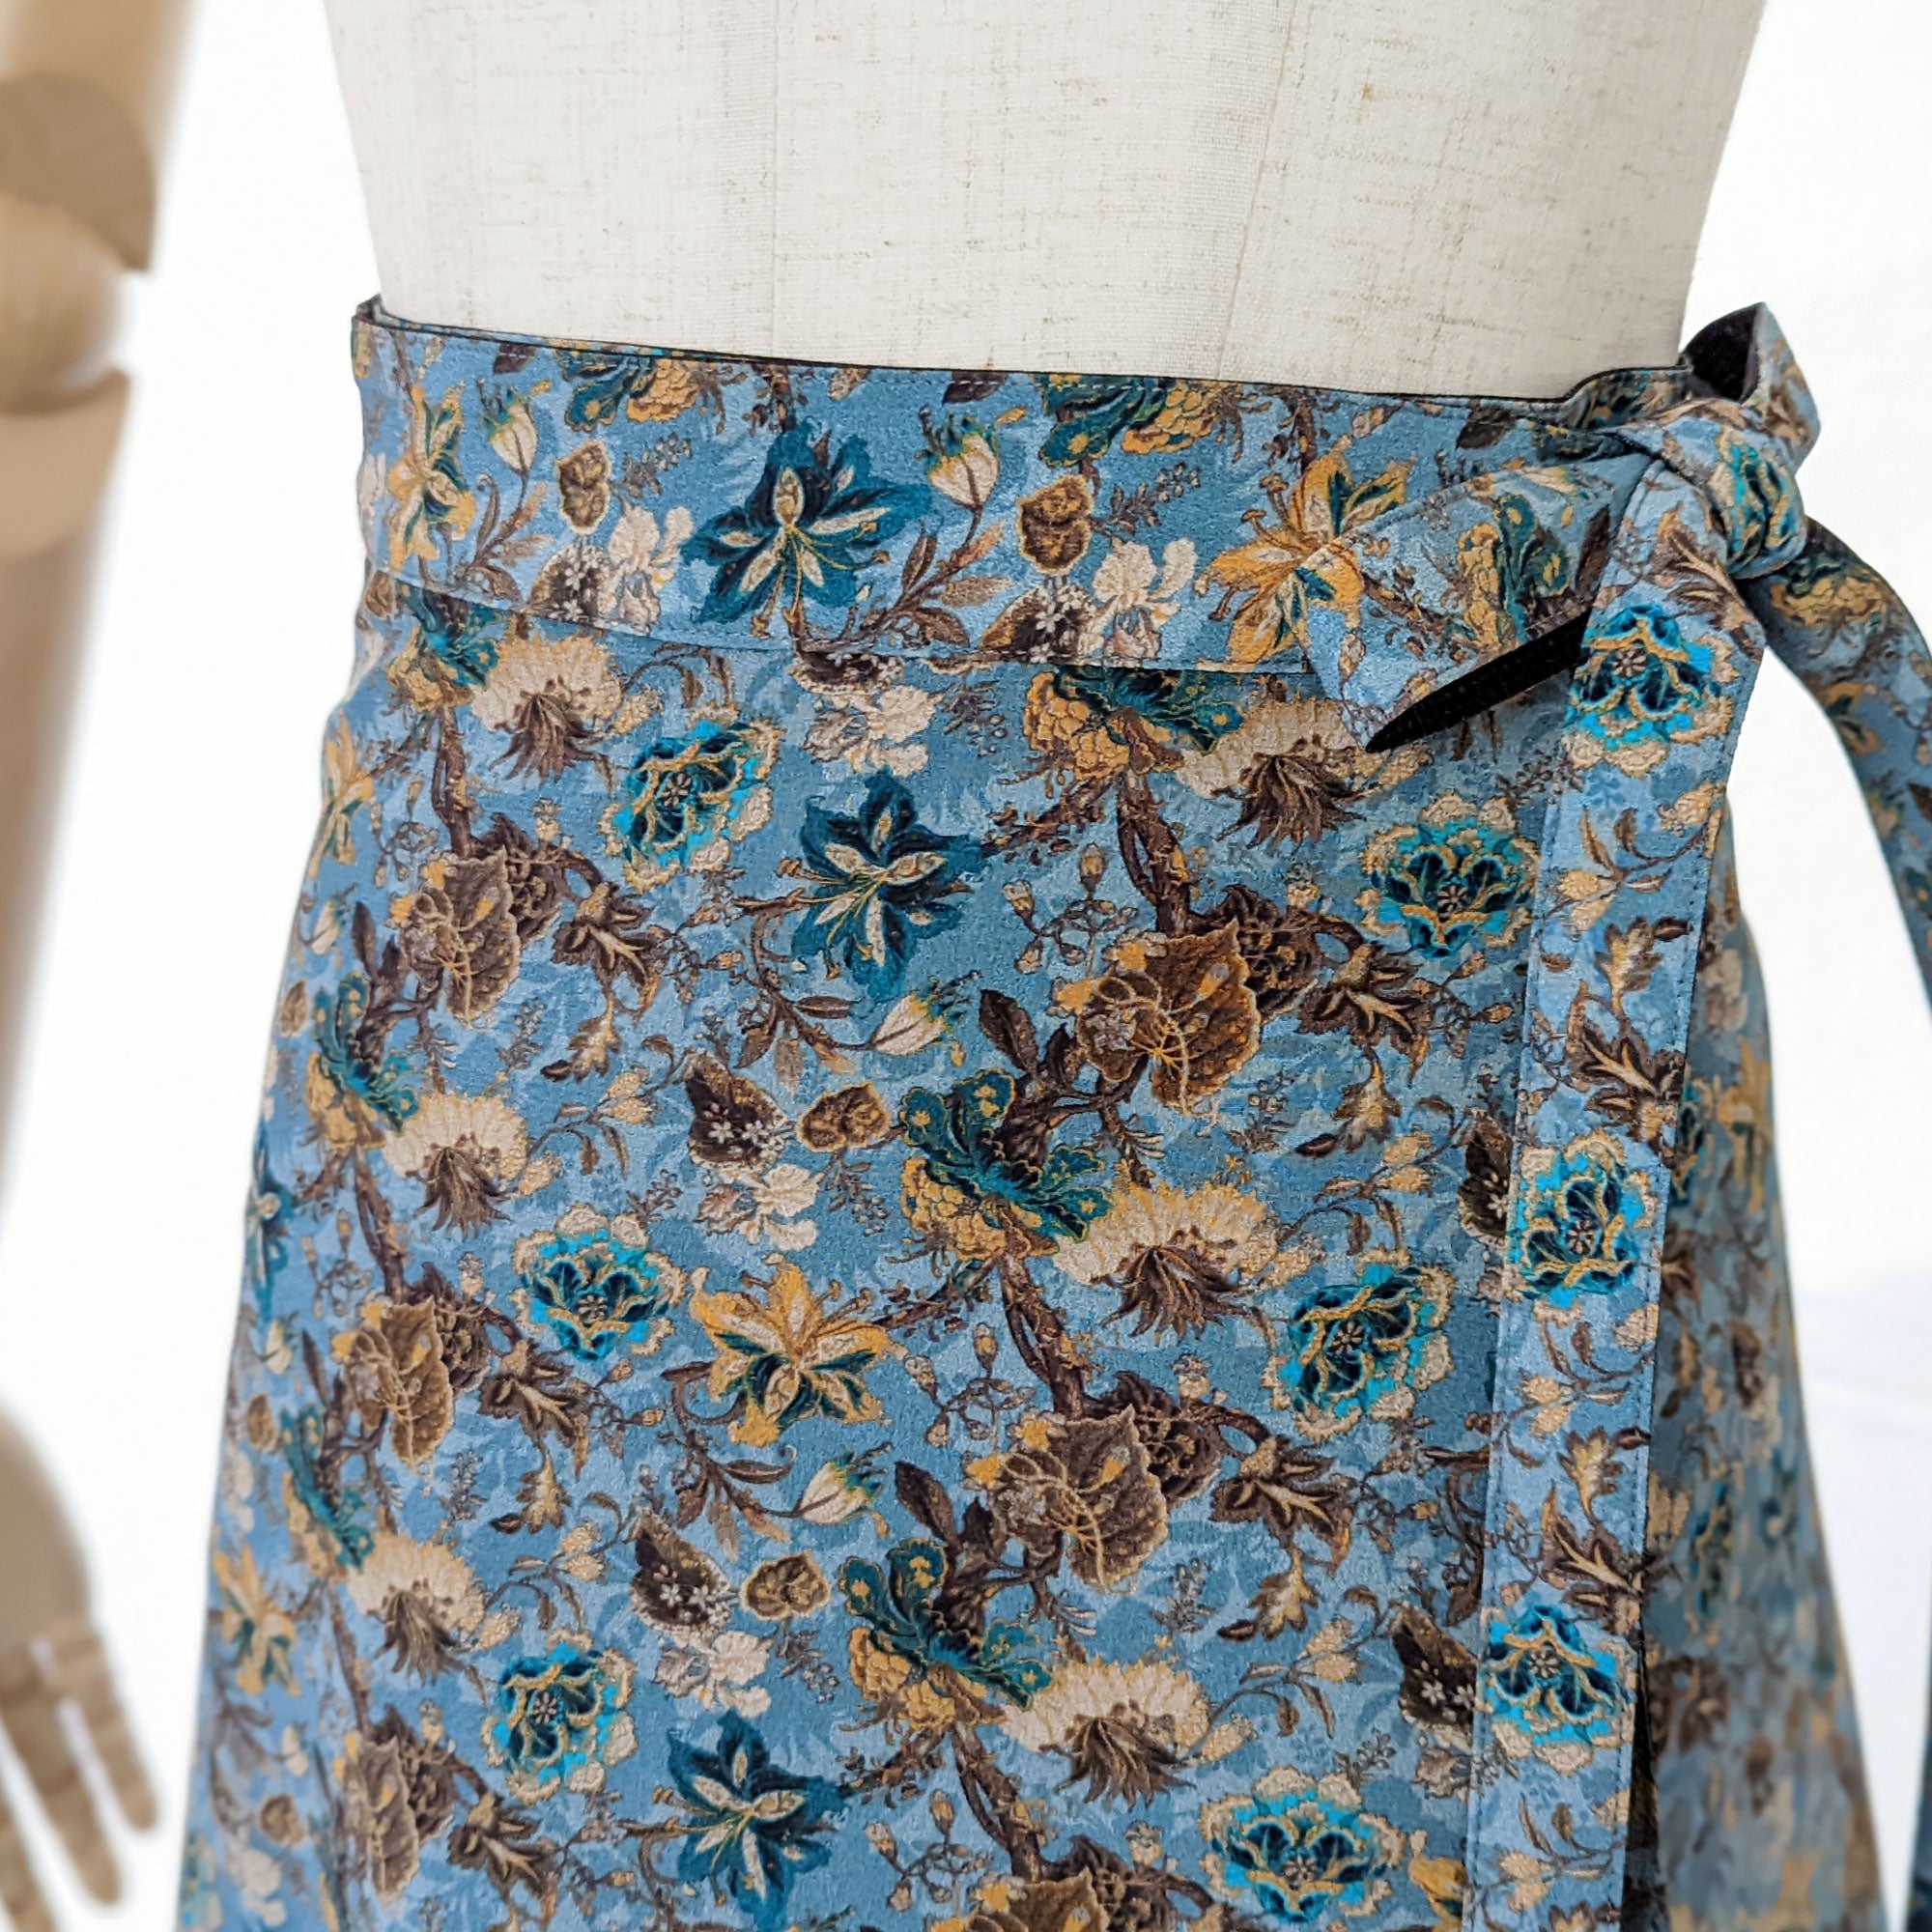 Reversible Skirt Flare - Vintage Blu